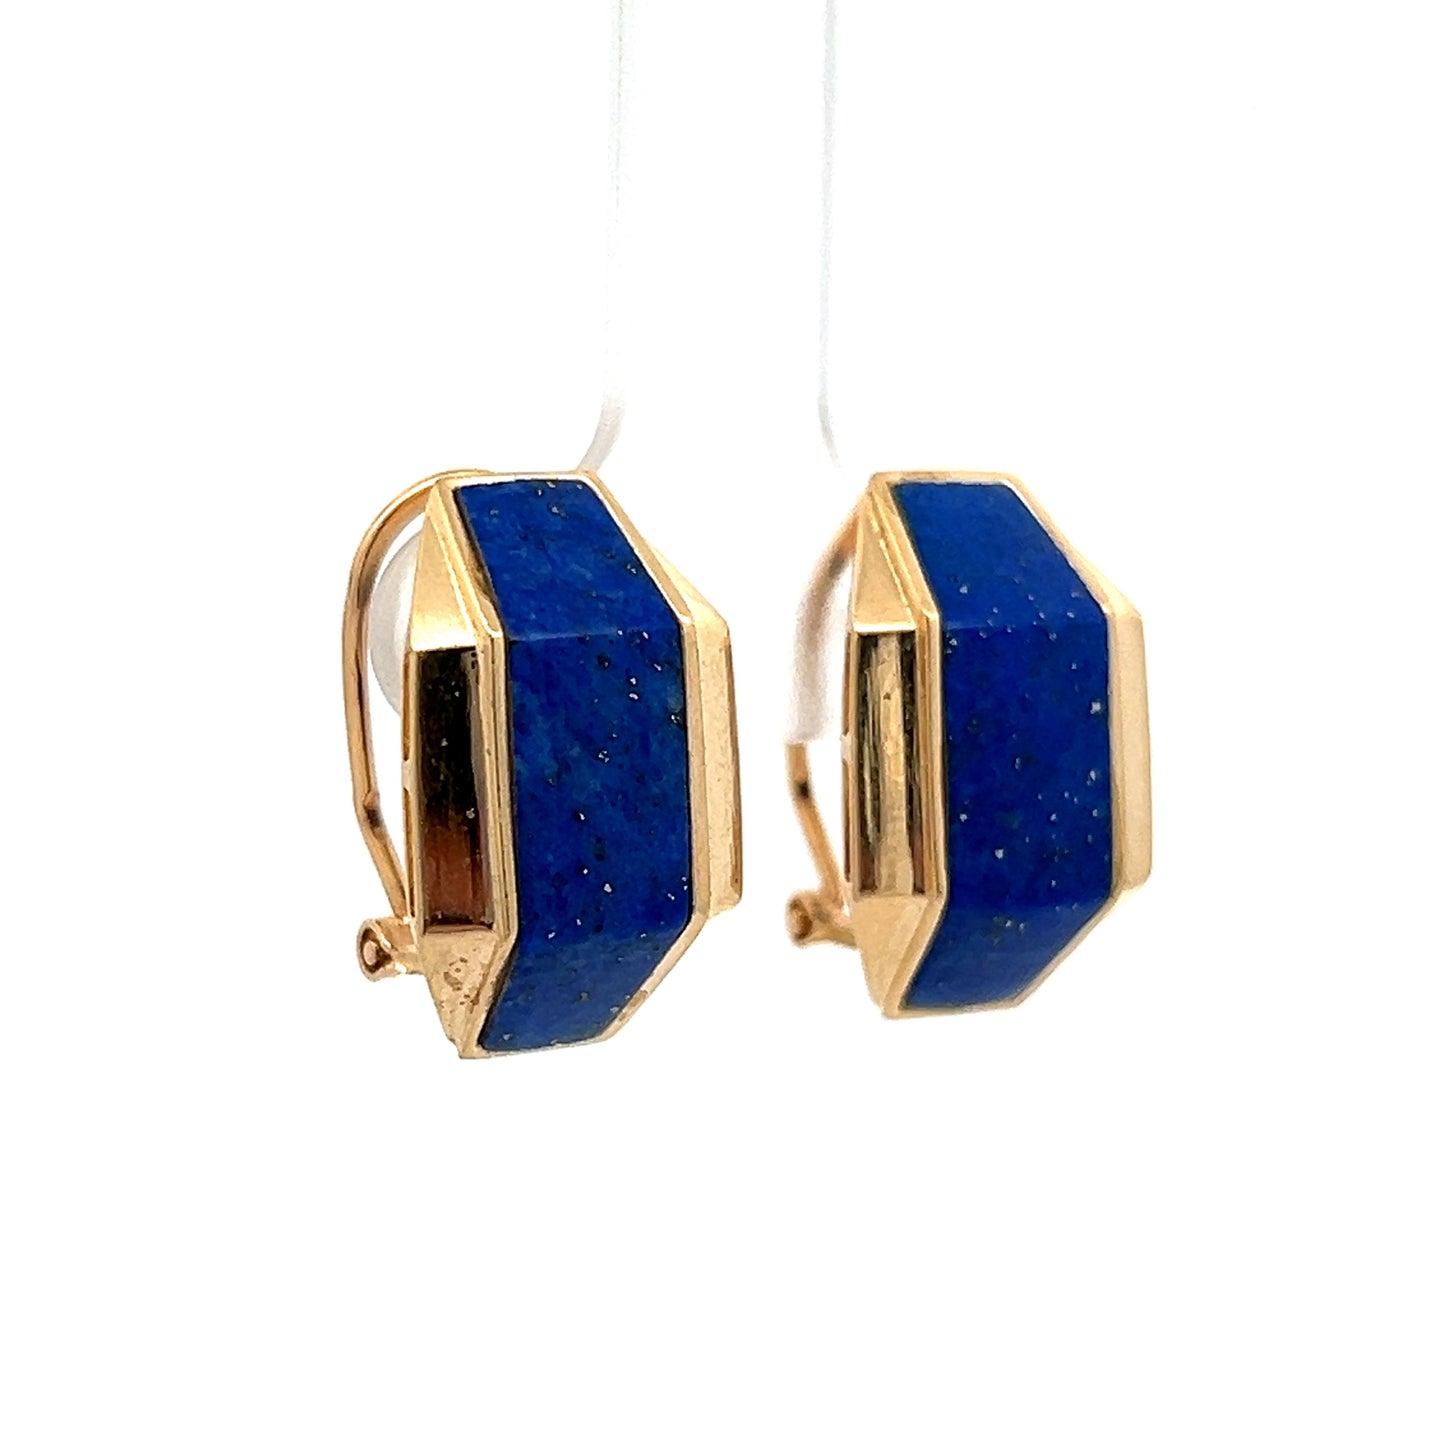 Vintage Lapis Lazuli Stud Earrings in 14k Yellow Gold